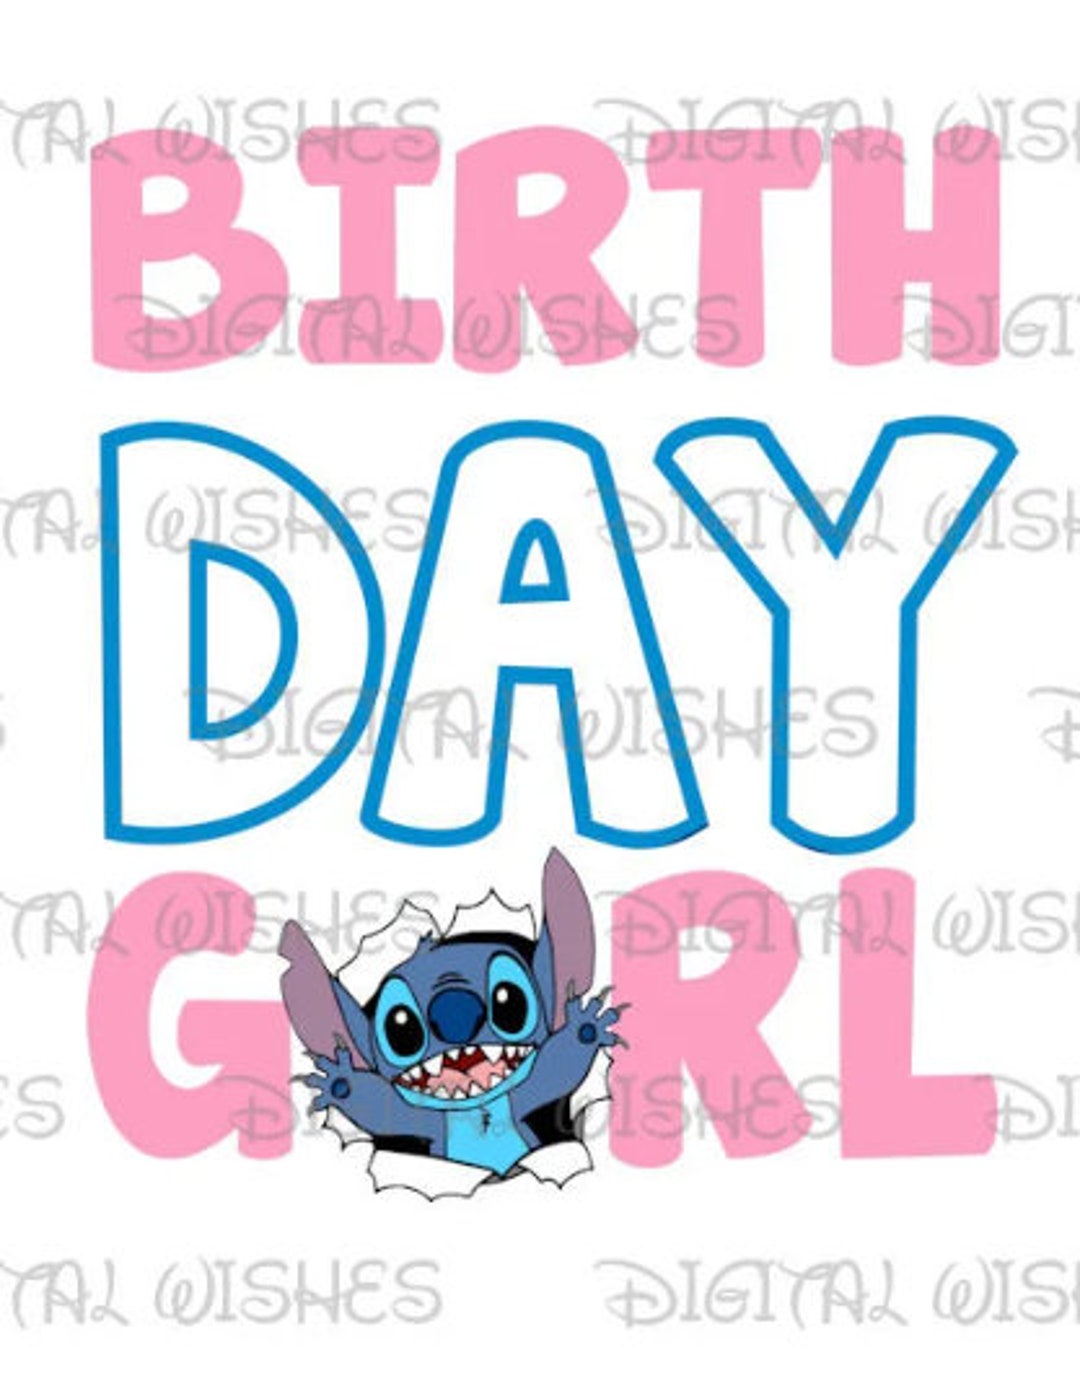 Stitch Birthday Girl image png fichier numérique sublimation - Etsy France